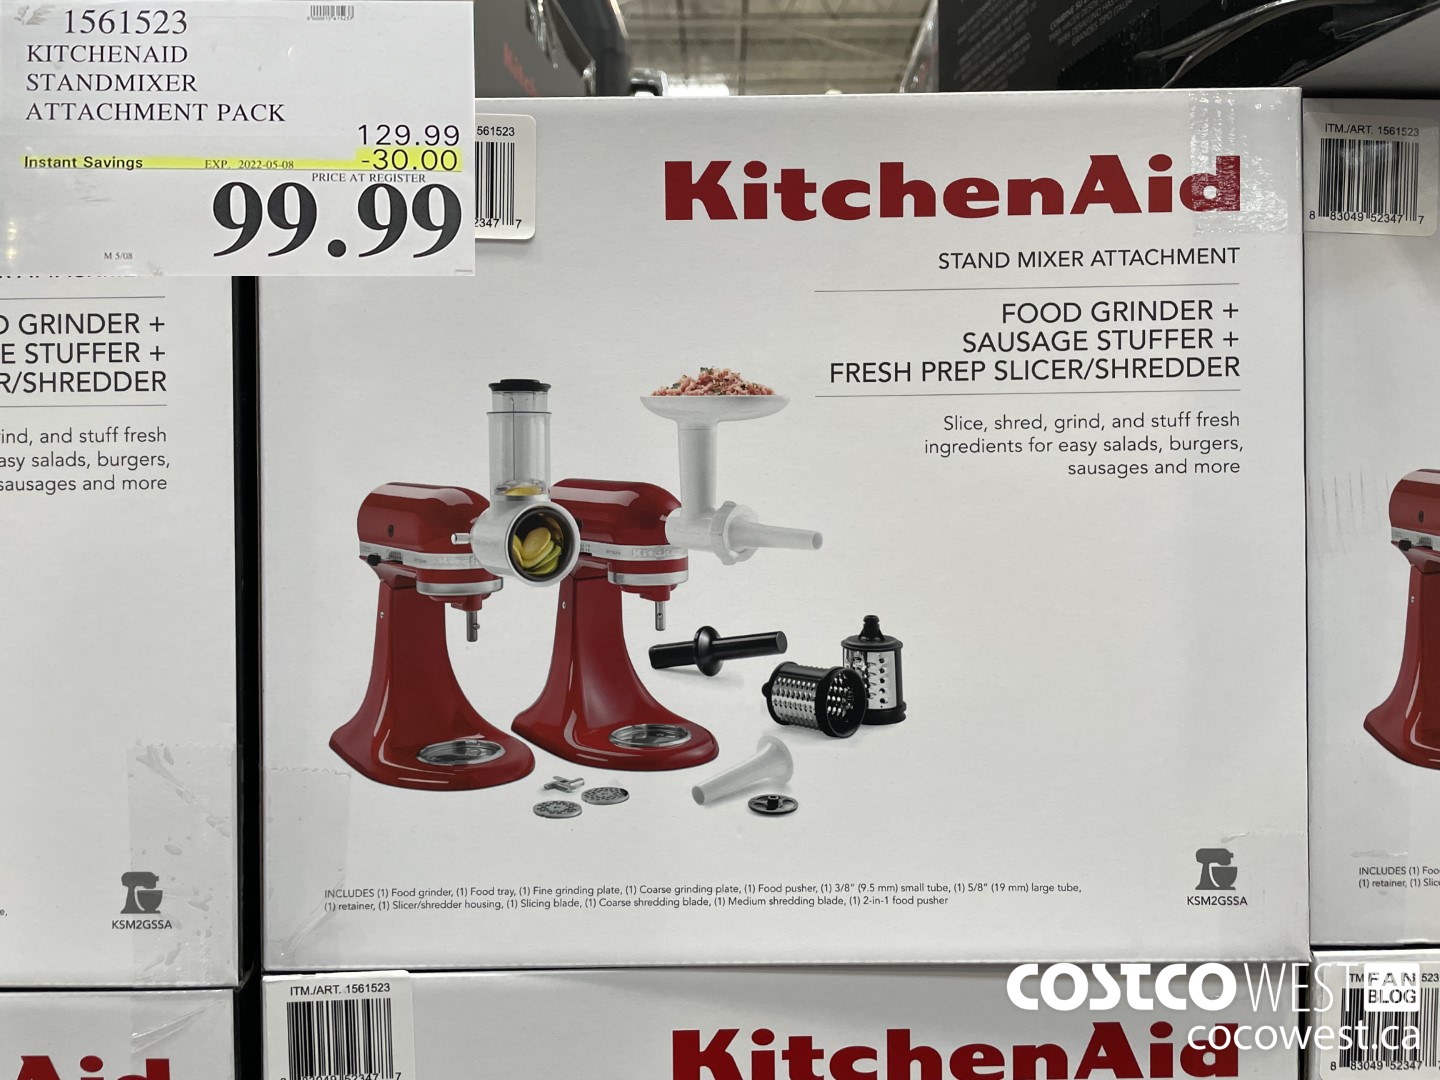 KG3 - KitchenAid Stand Mixer Grease, 3 oz